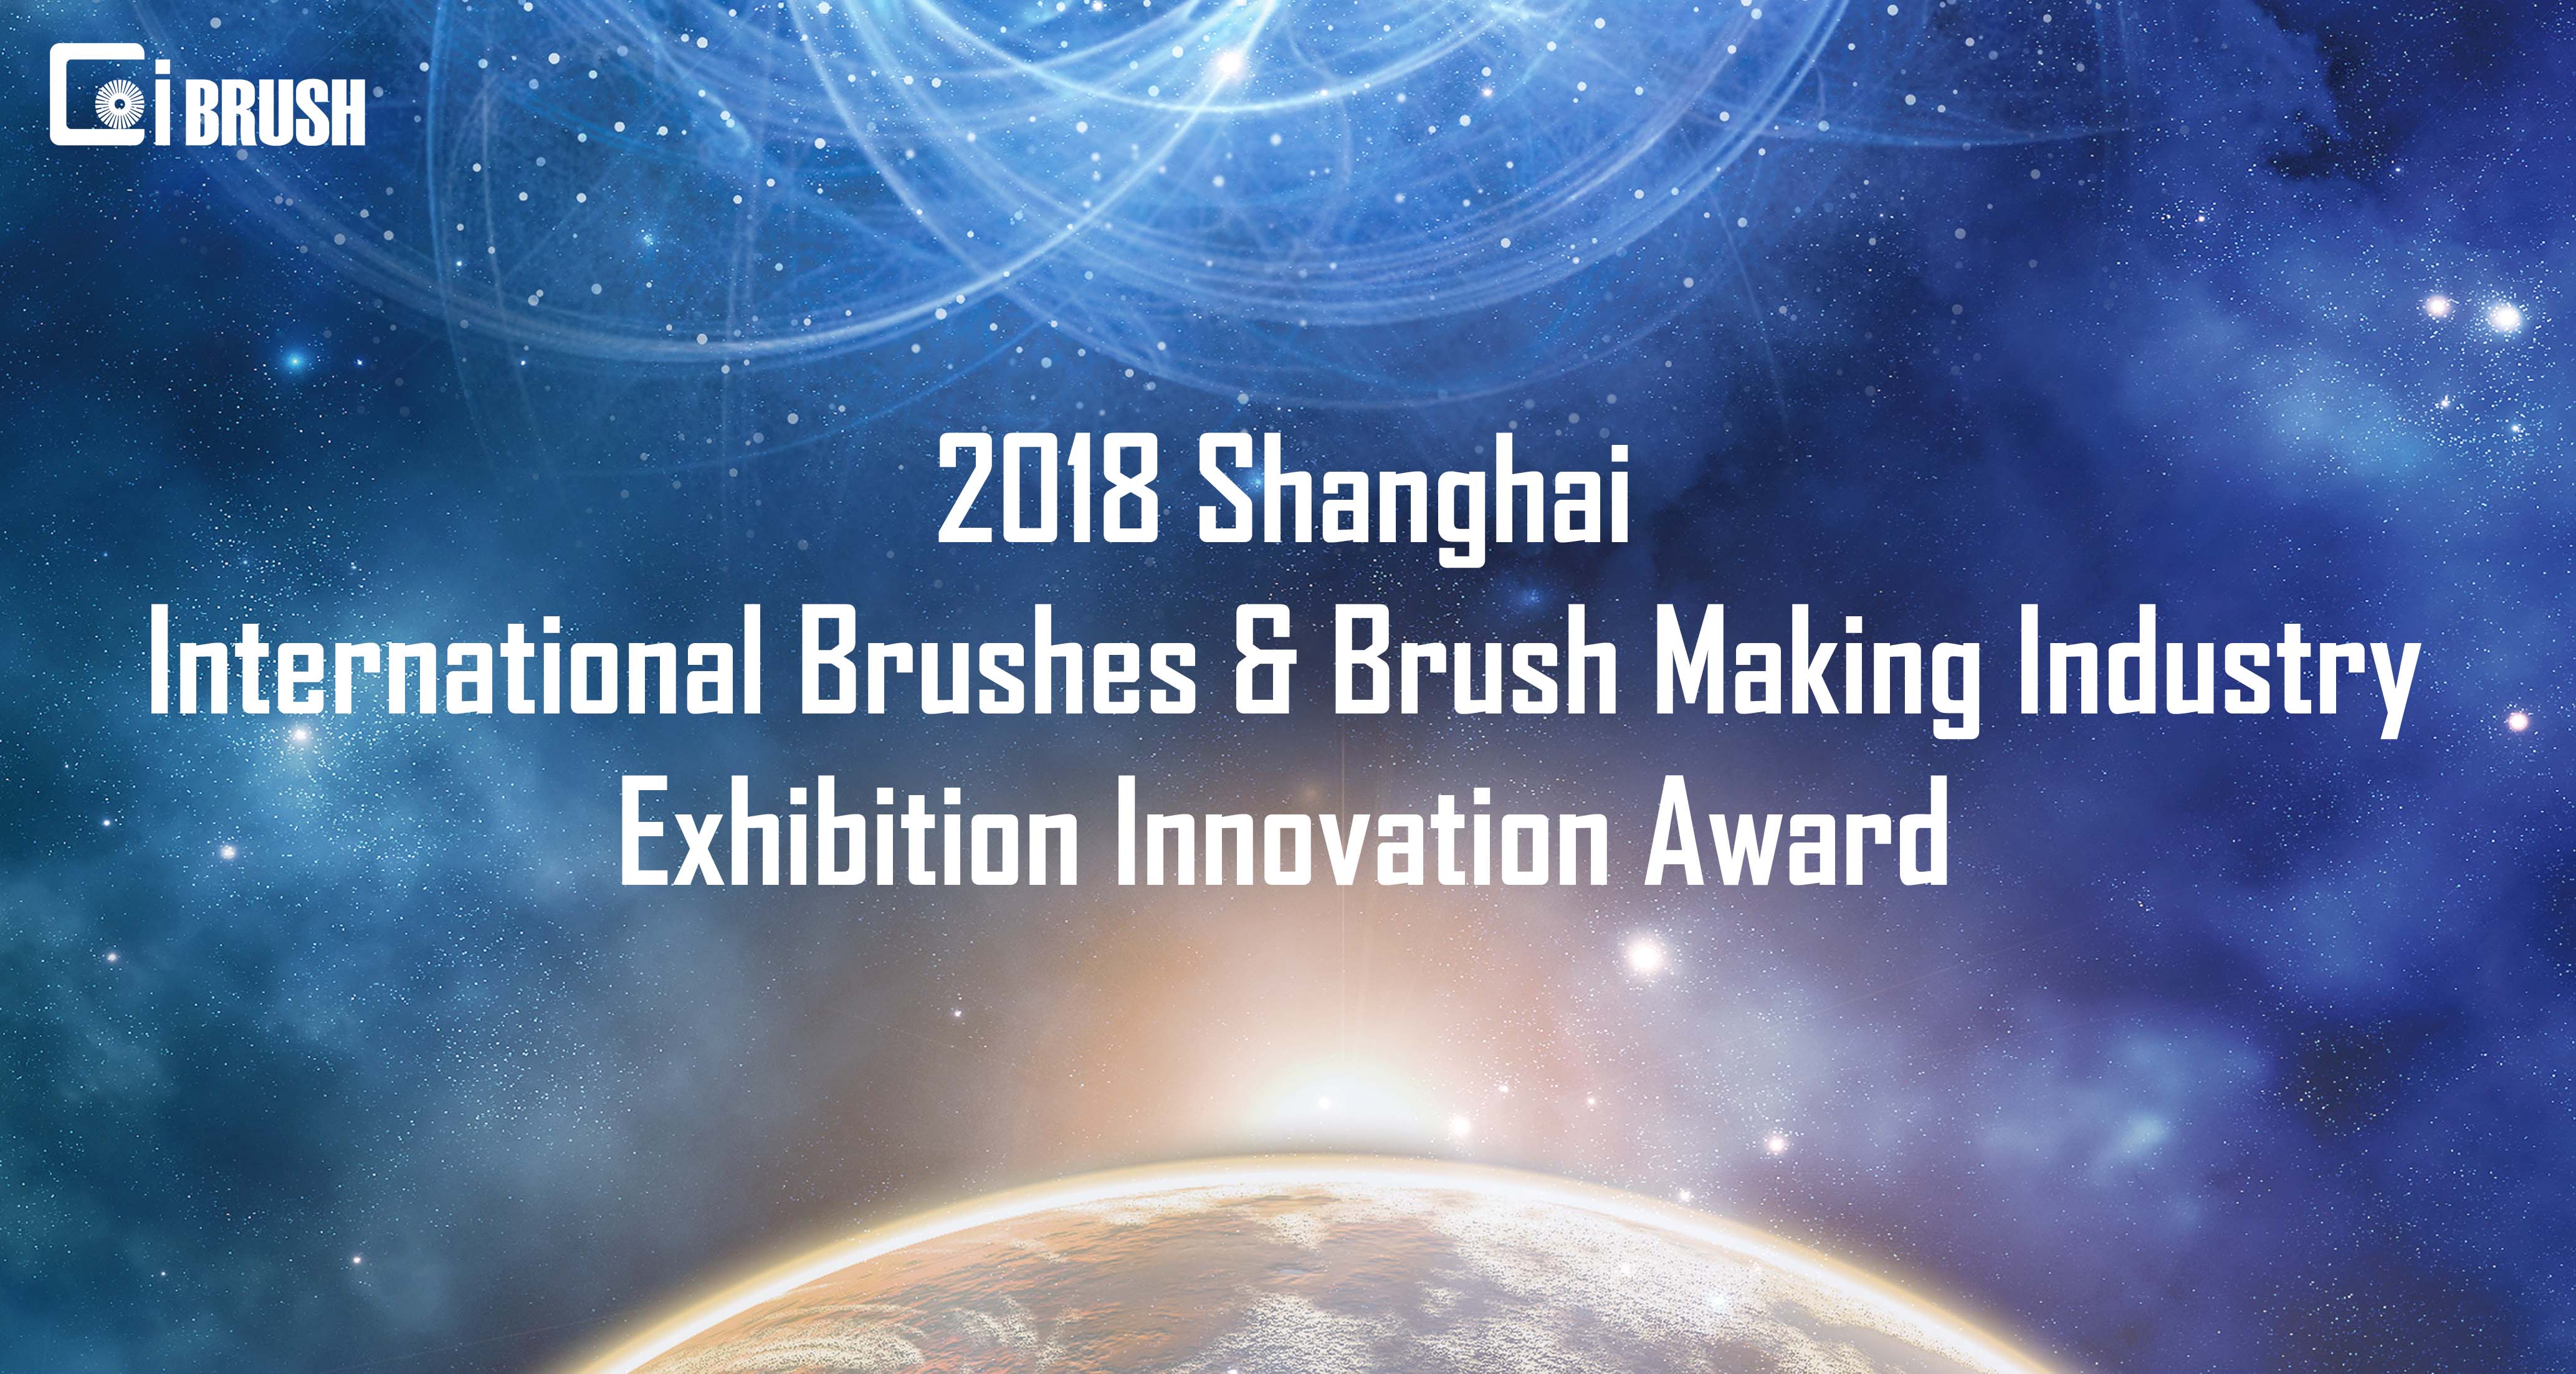 2018 Shanghai International Brushes & Brush Making Industry Exhibition Innovation Award (abbr. CIBRUSH2018 Innovation Award).